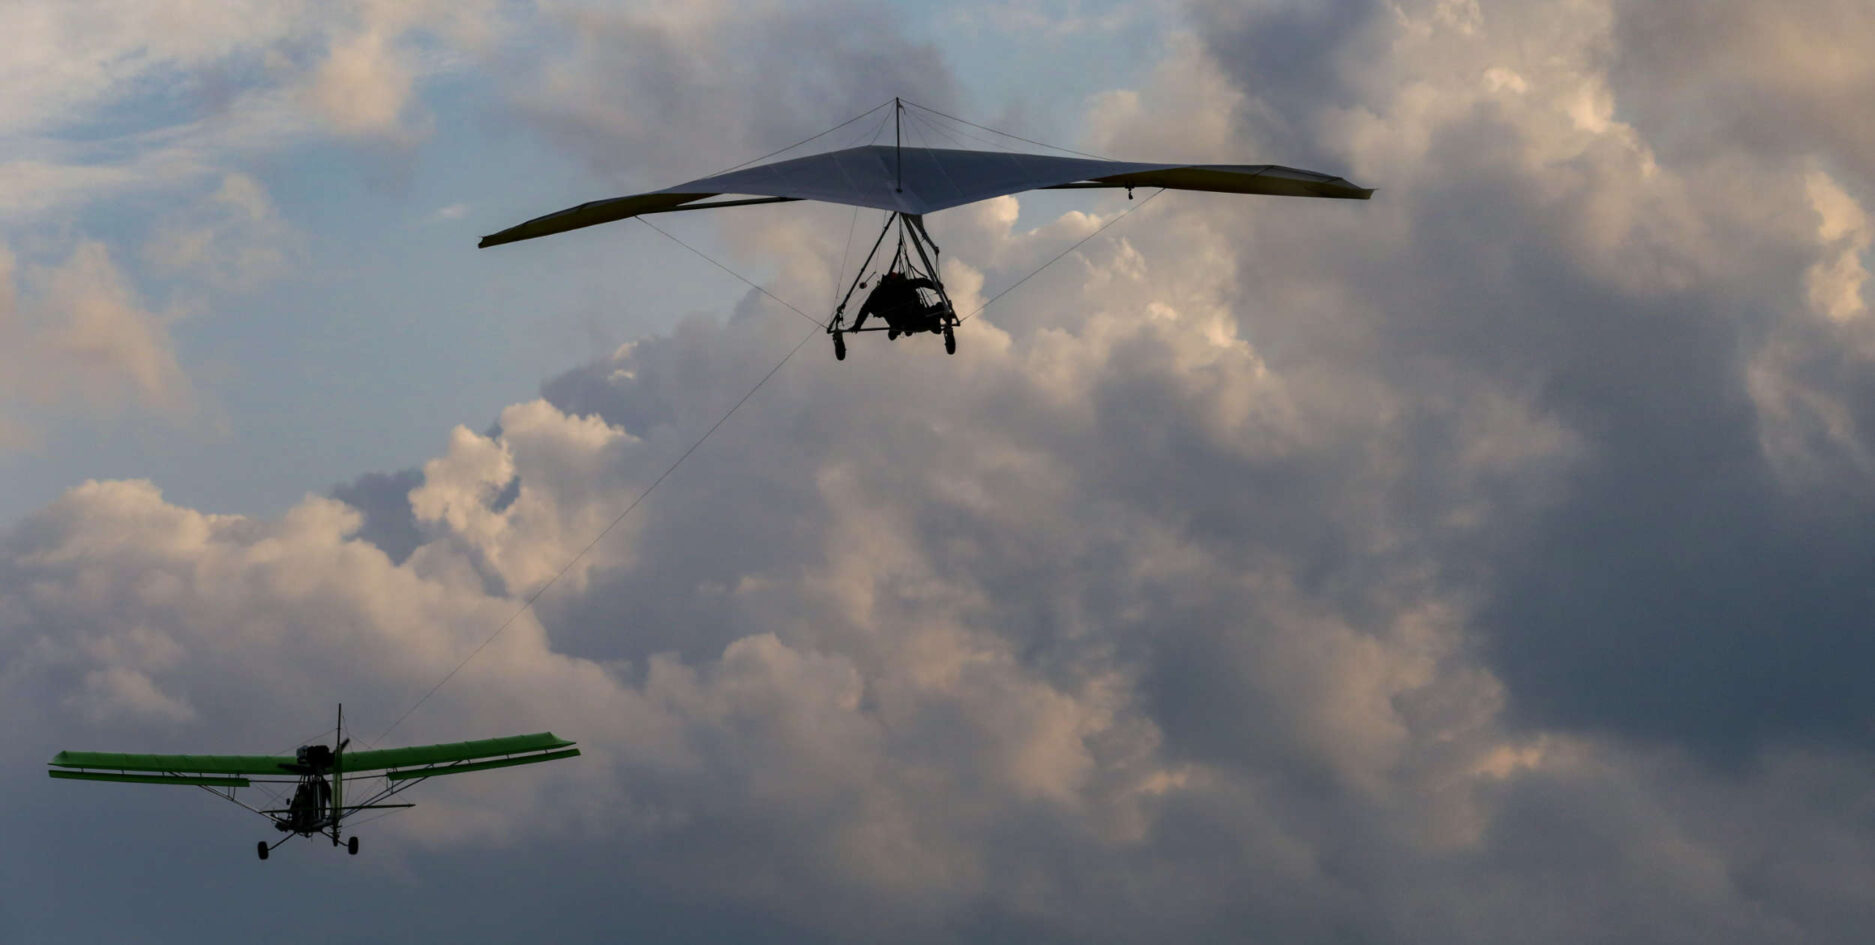 Free Air Hang Gliding Festival